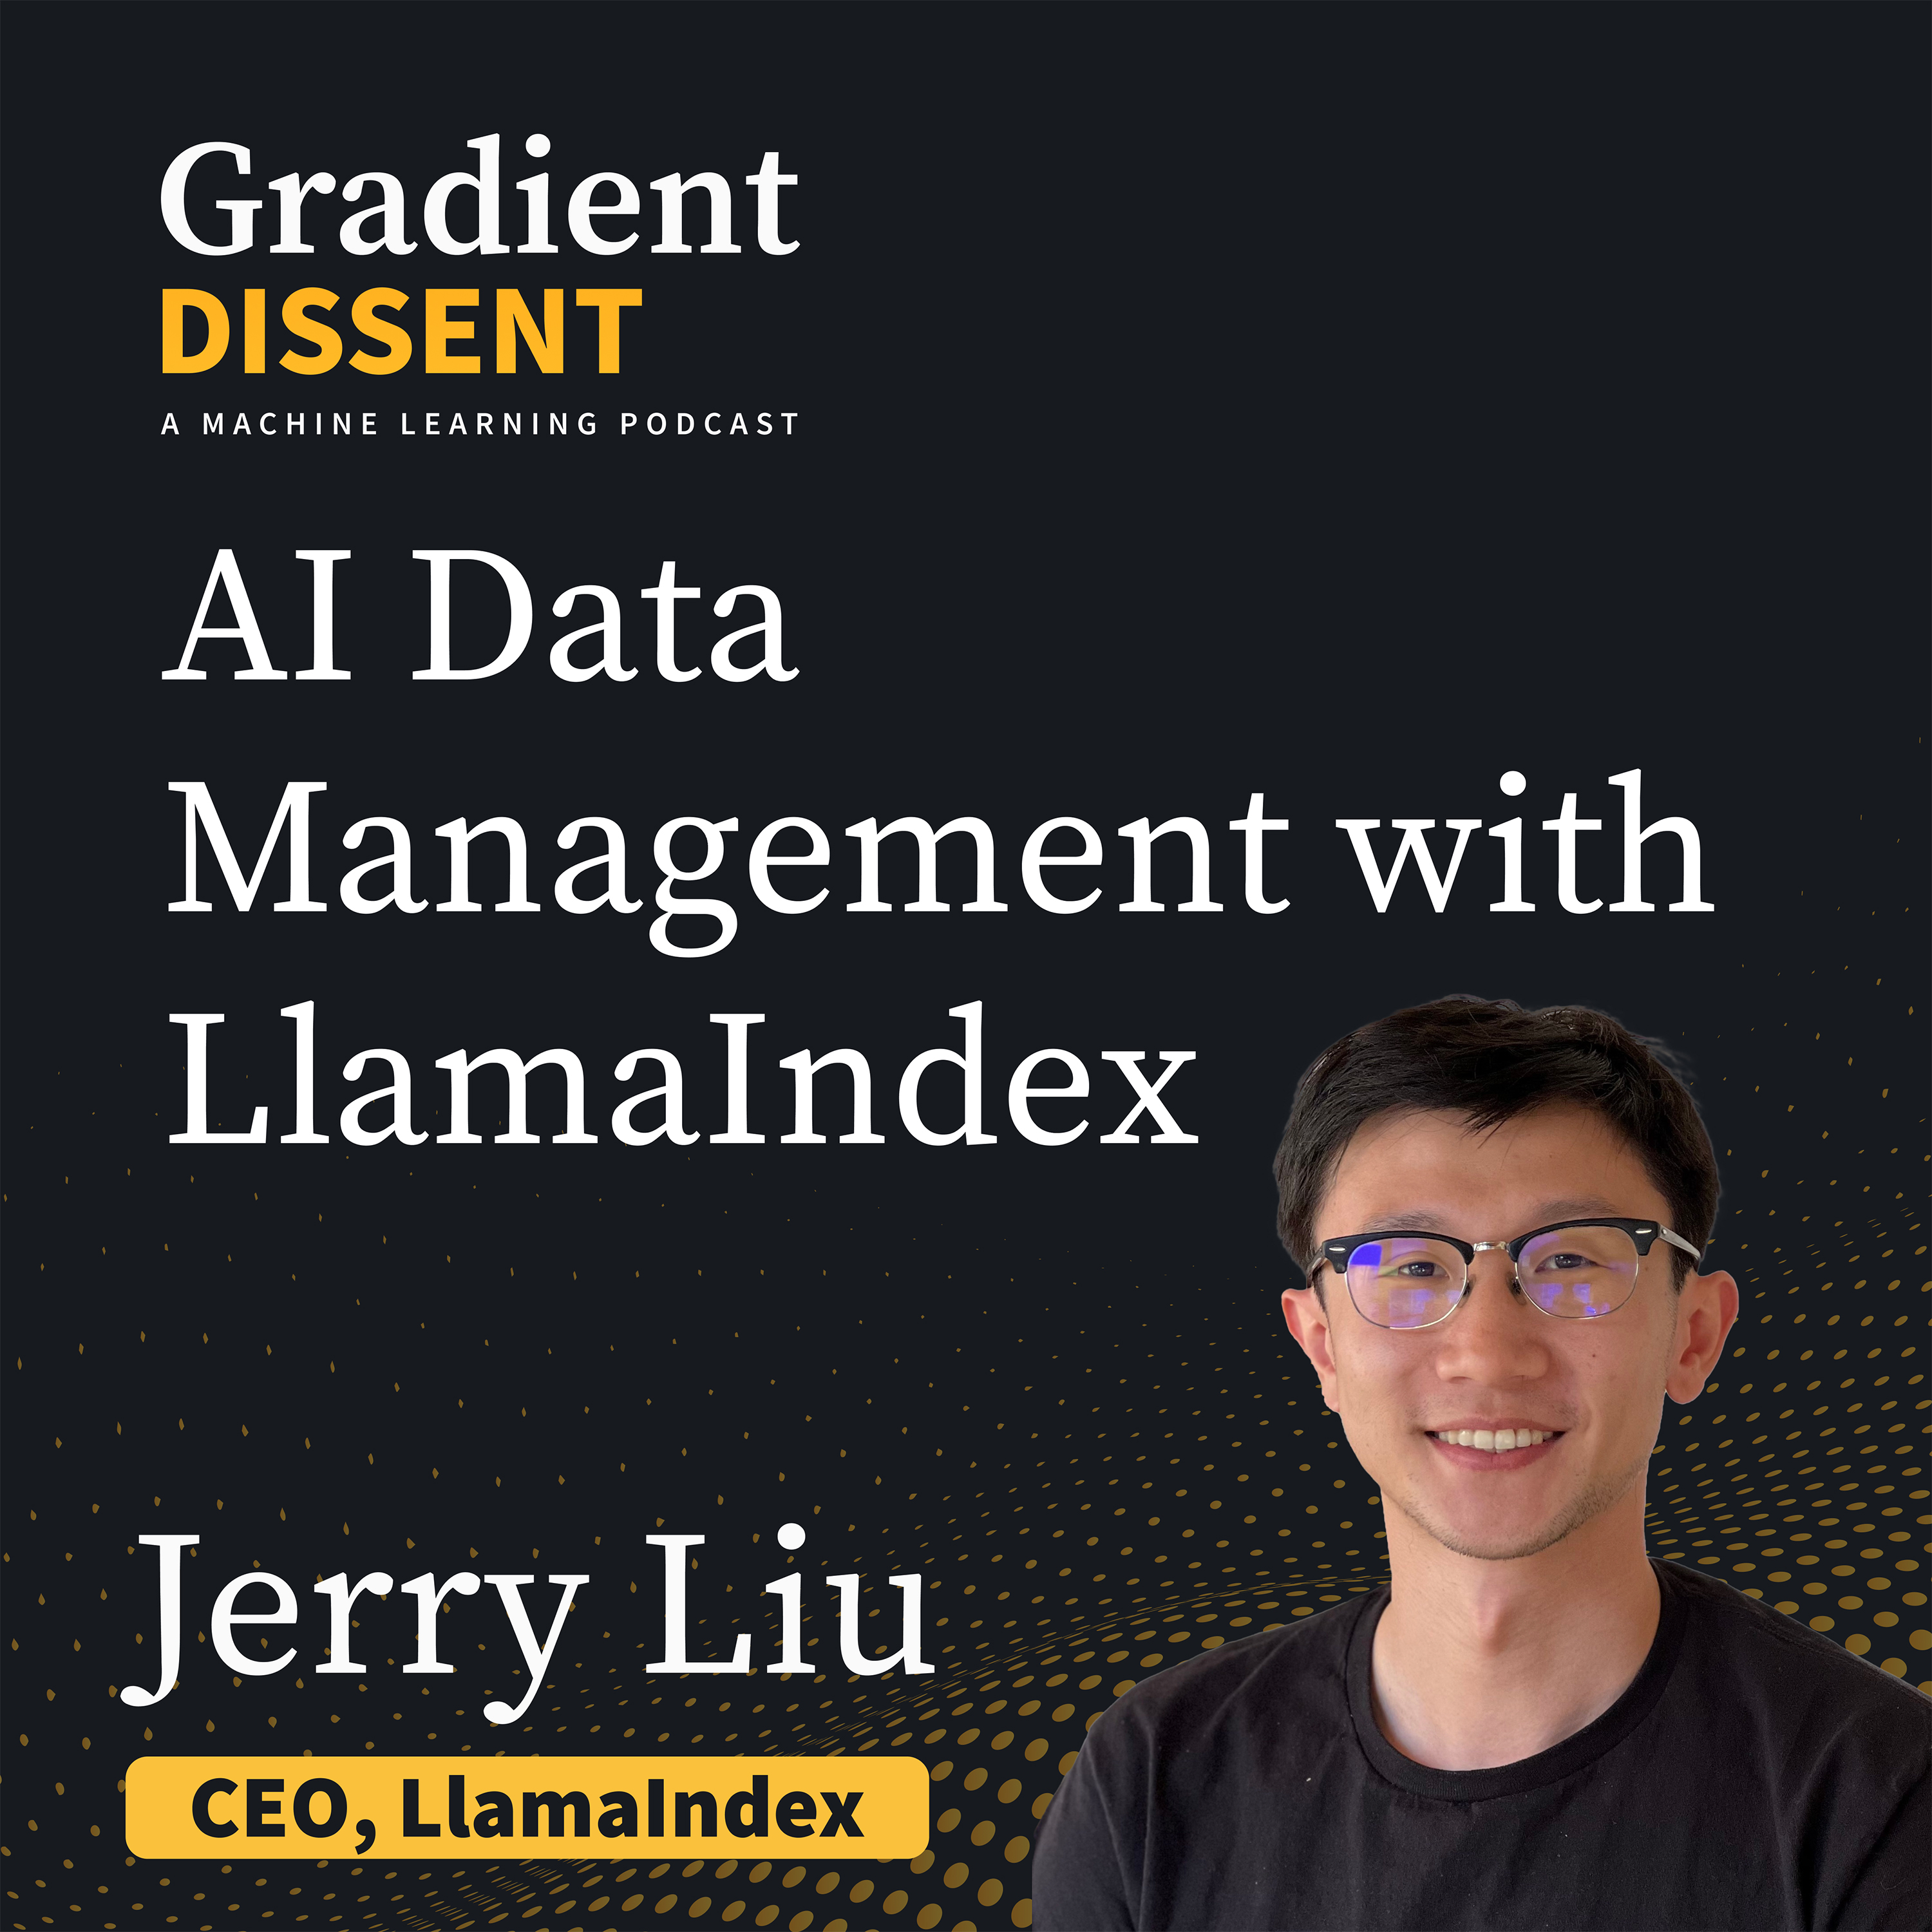 Revolutionizing AI Data Management with Jerry Liu, CEO of LlamaIndex